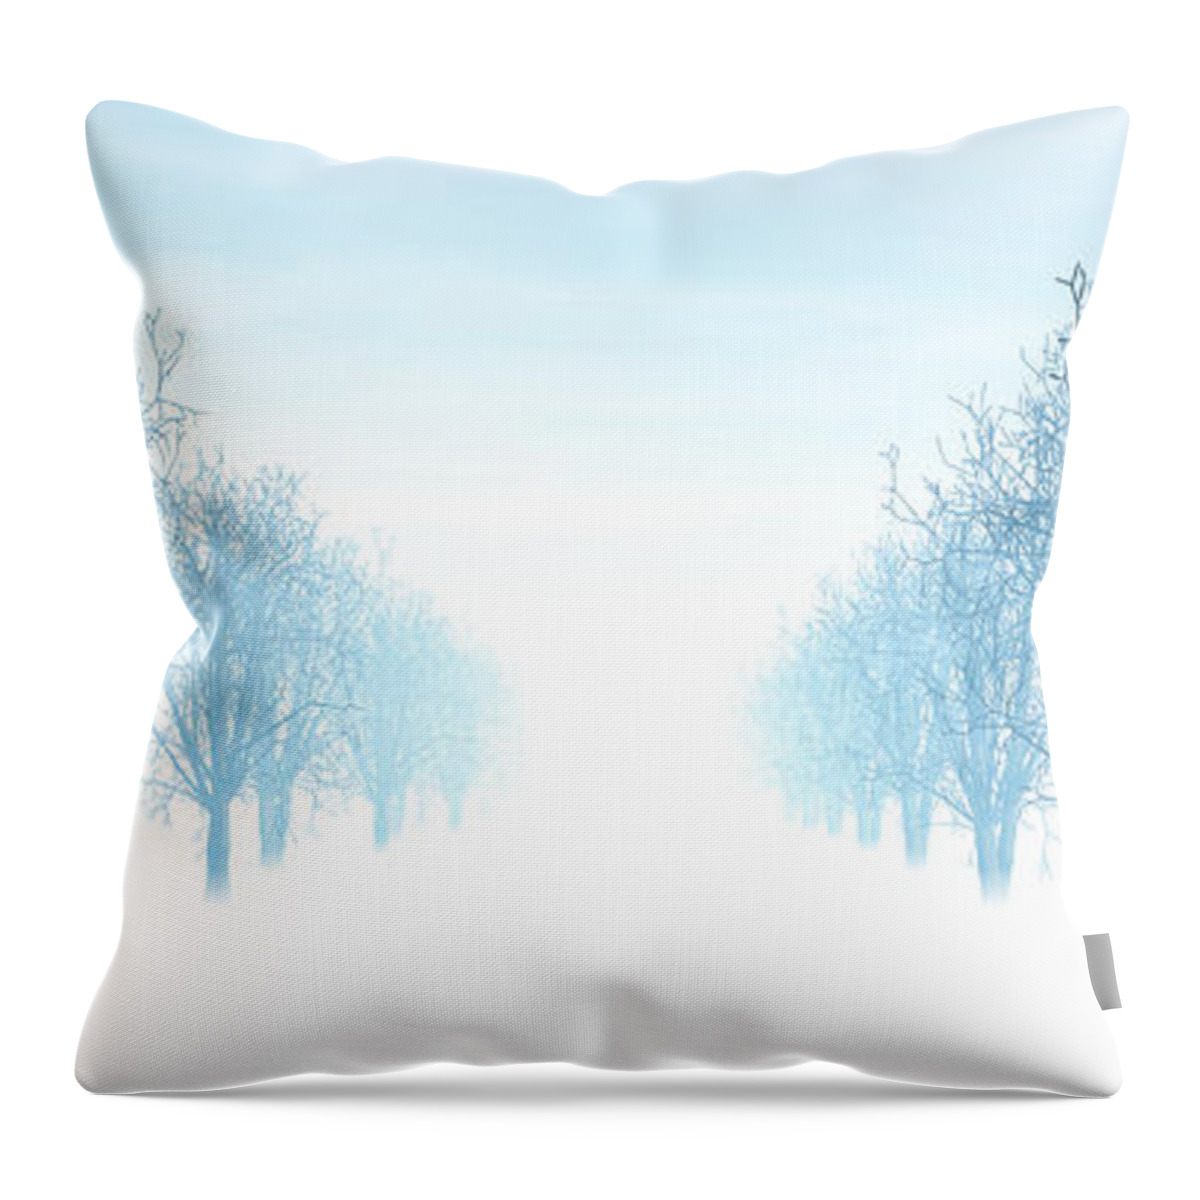 Avenue Throw Pillow featuring the digital art Winter Avenue by Nicholas Burningham